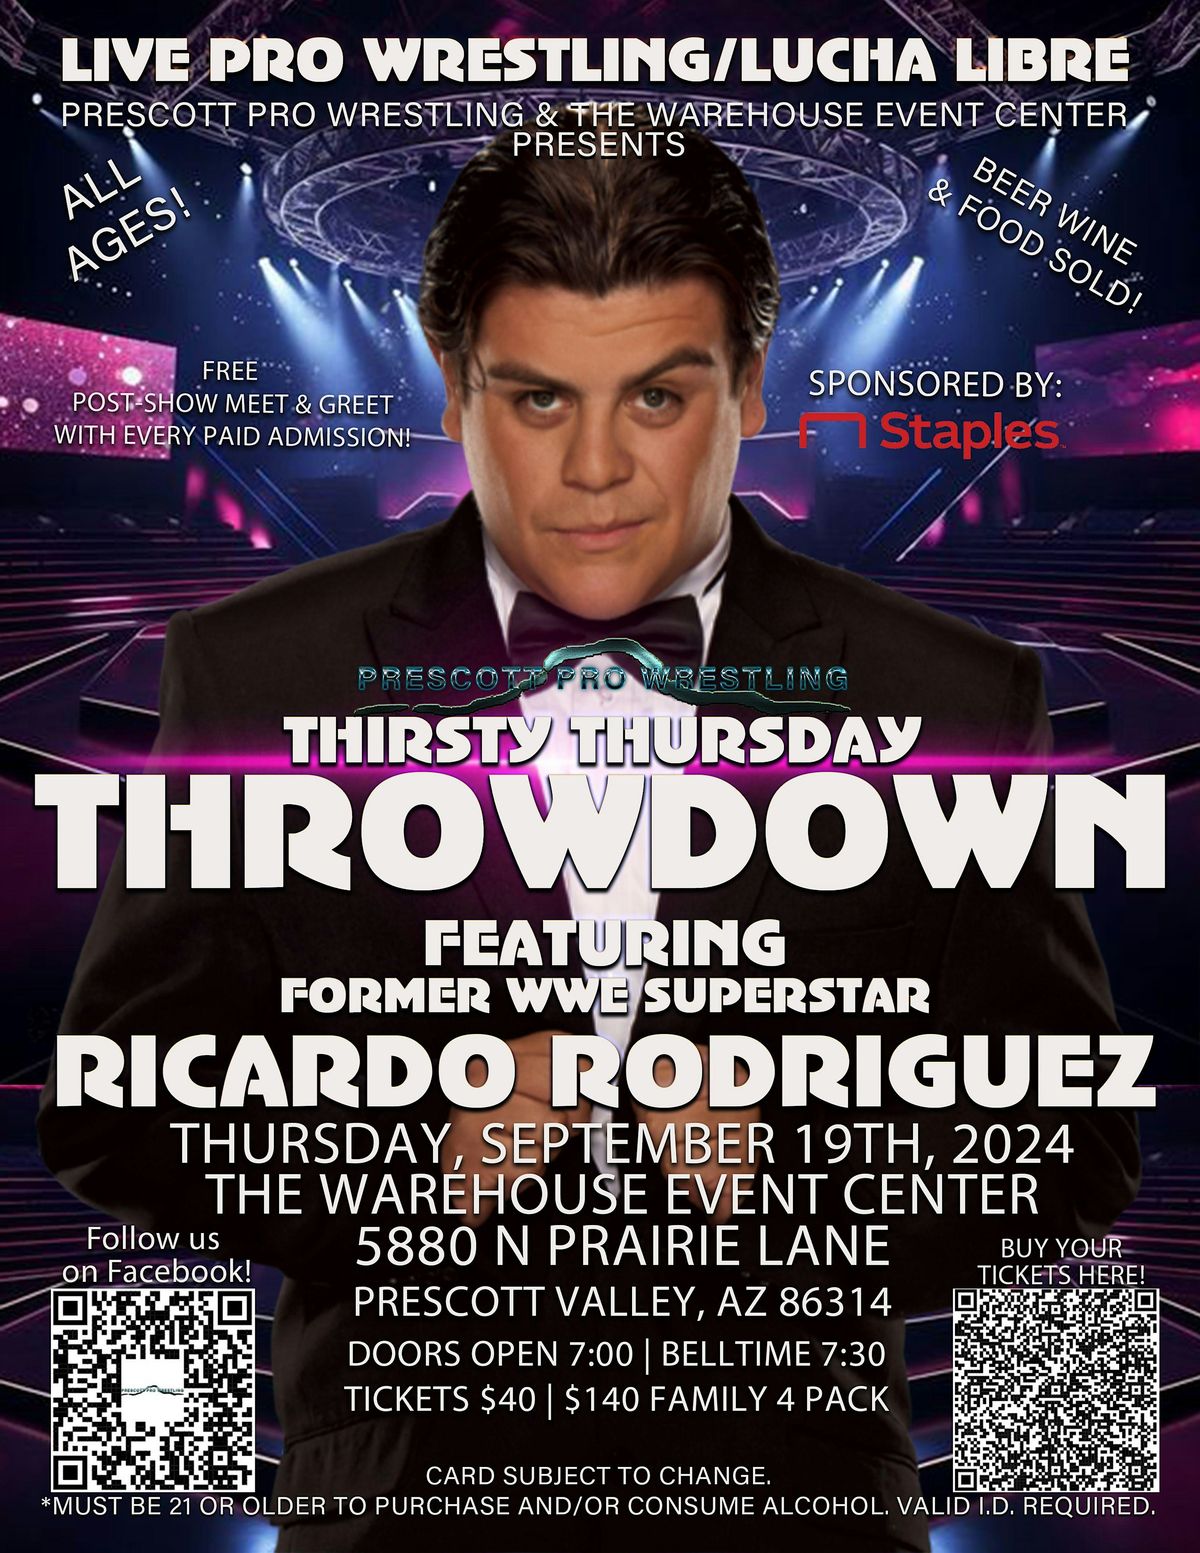 Thirsty Thursday Throwdown featuring former WWE Superstar Ricardo Rodriguez